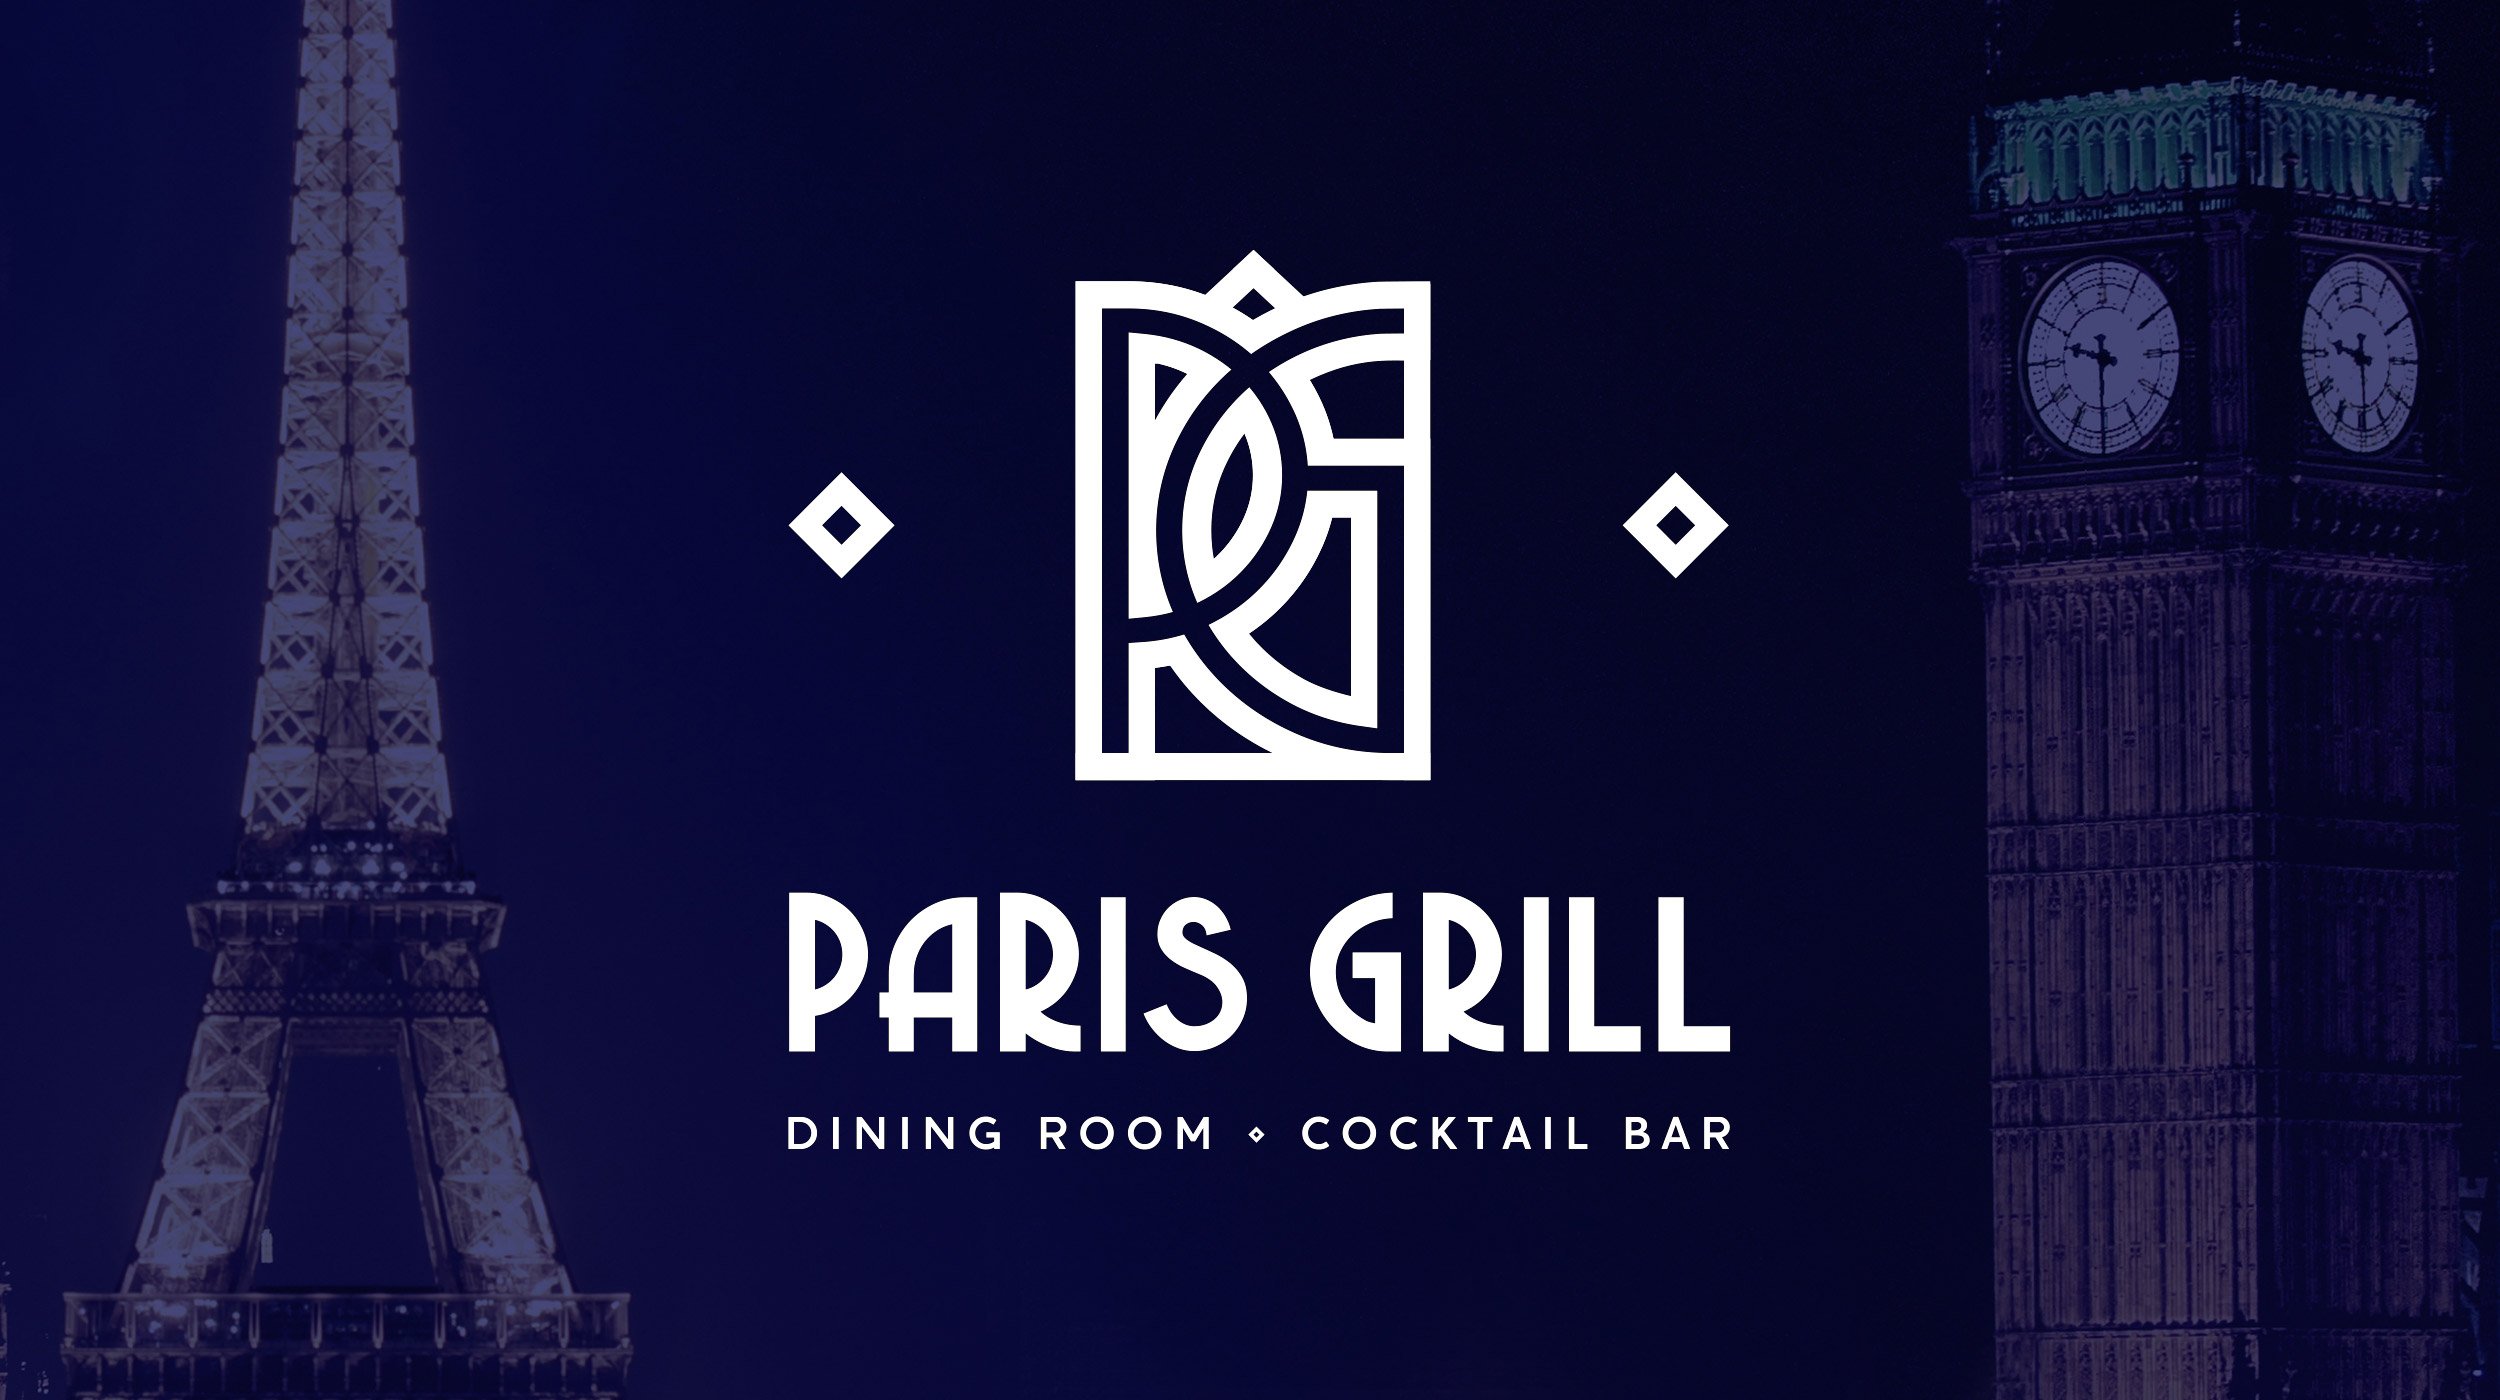 Paris-grill-logo.jpg